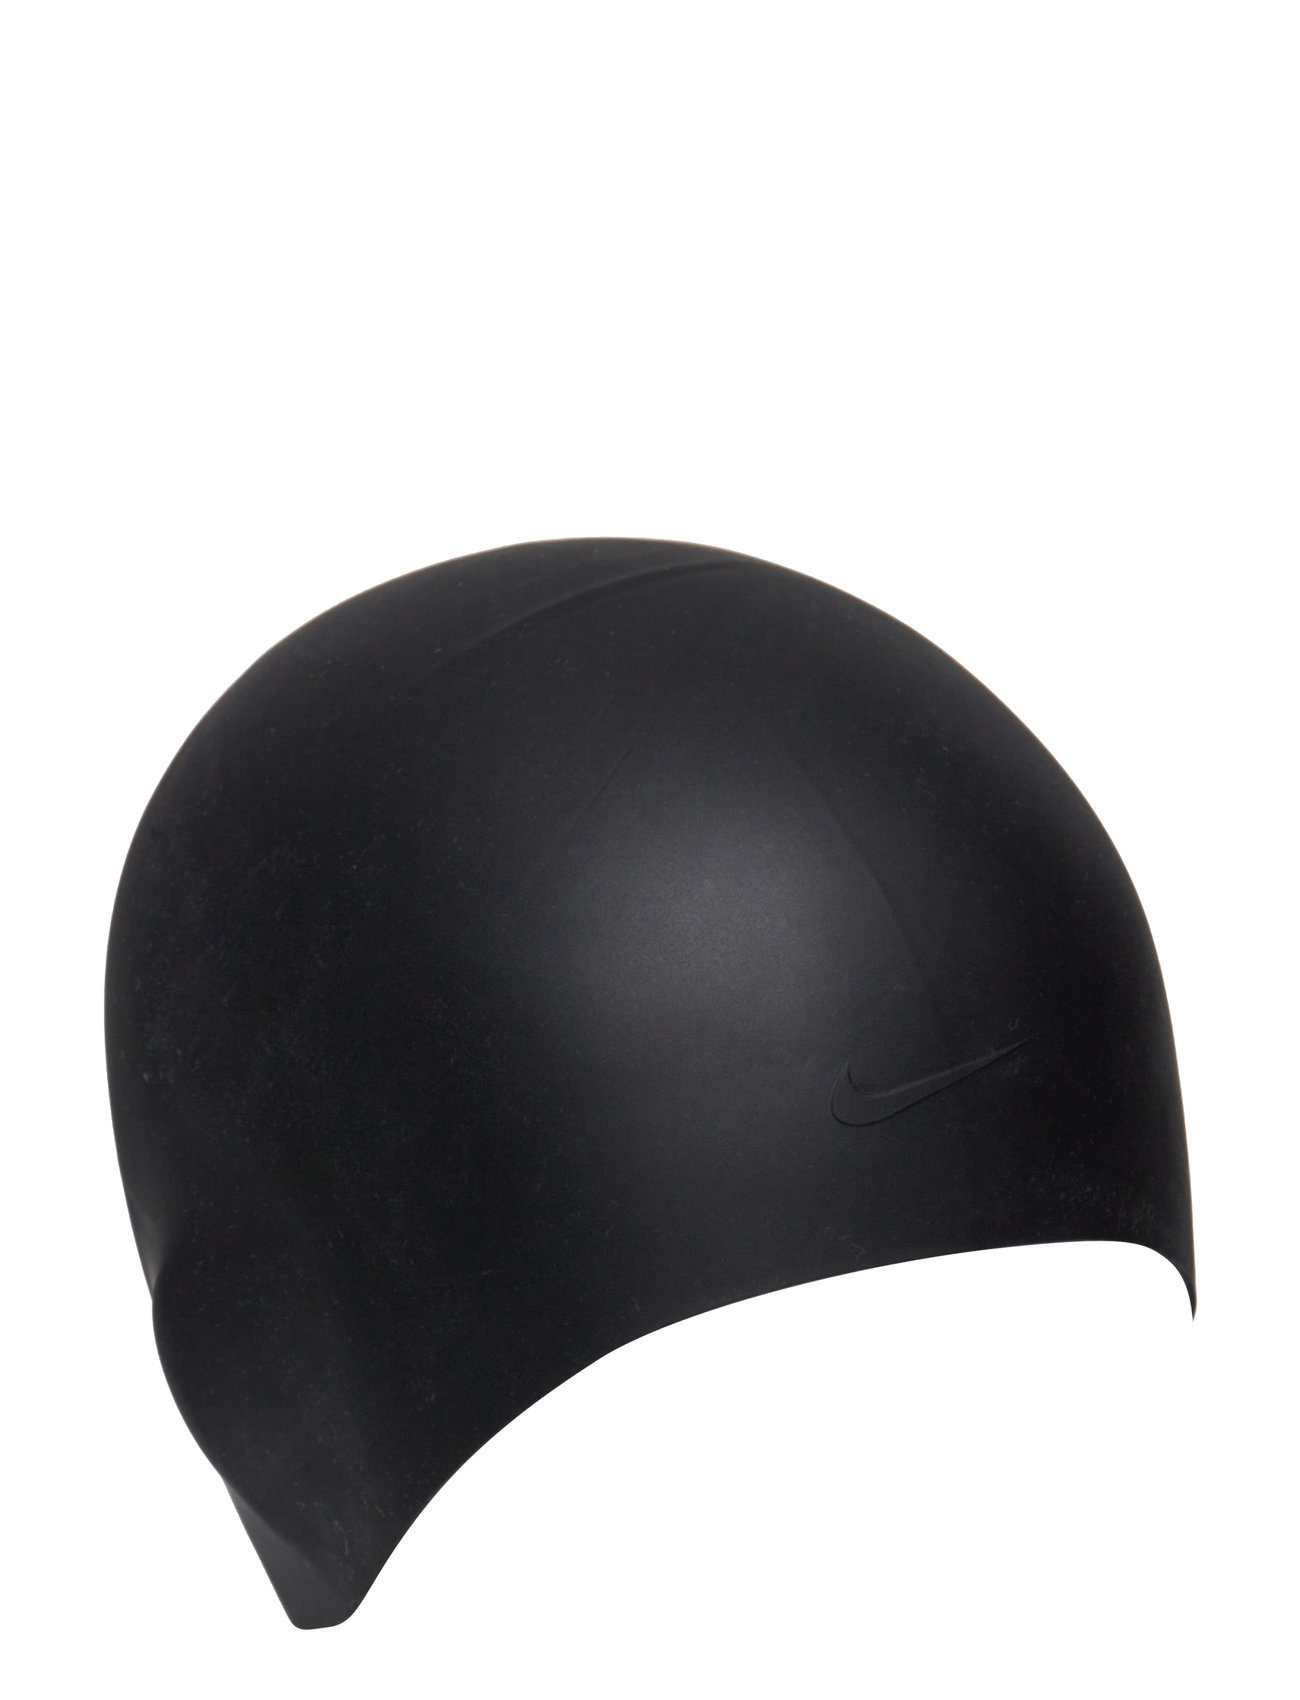 Nike Long Hair Silic Cap Sport Sports Equipment Swimming Accessories Black NIKE SWIM